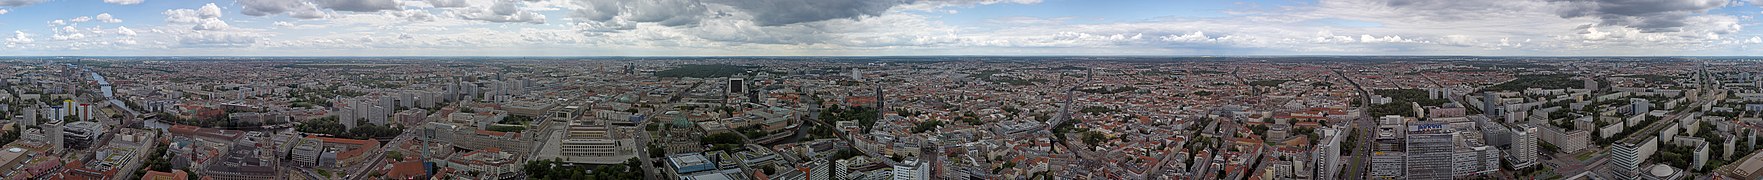 Berlin-Panorama vom Fernsehturm